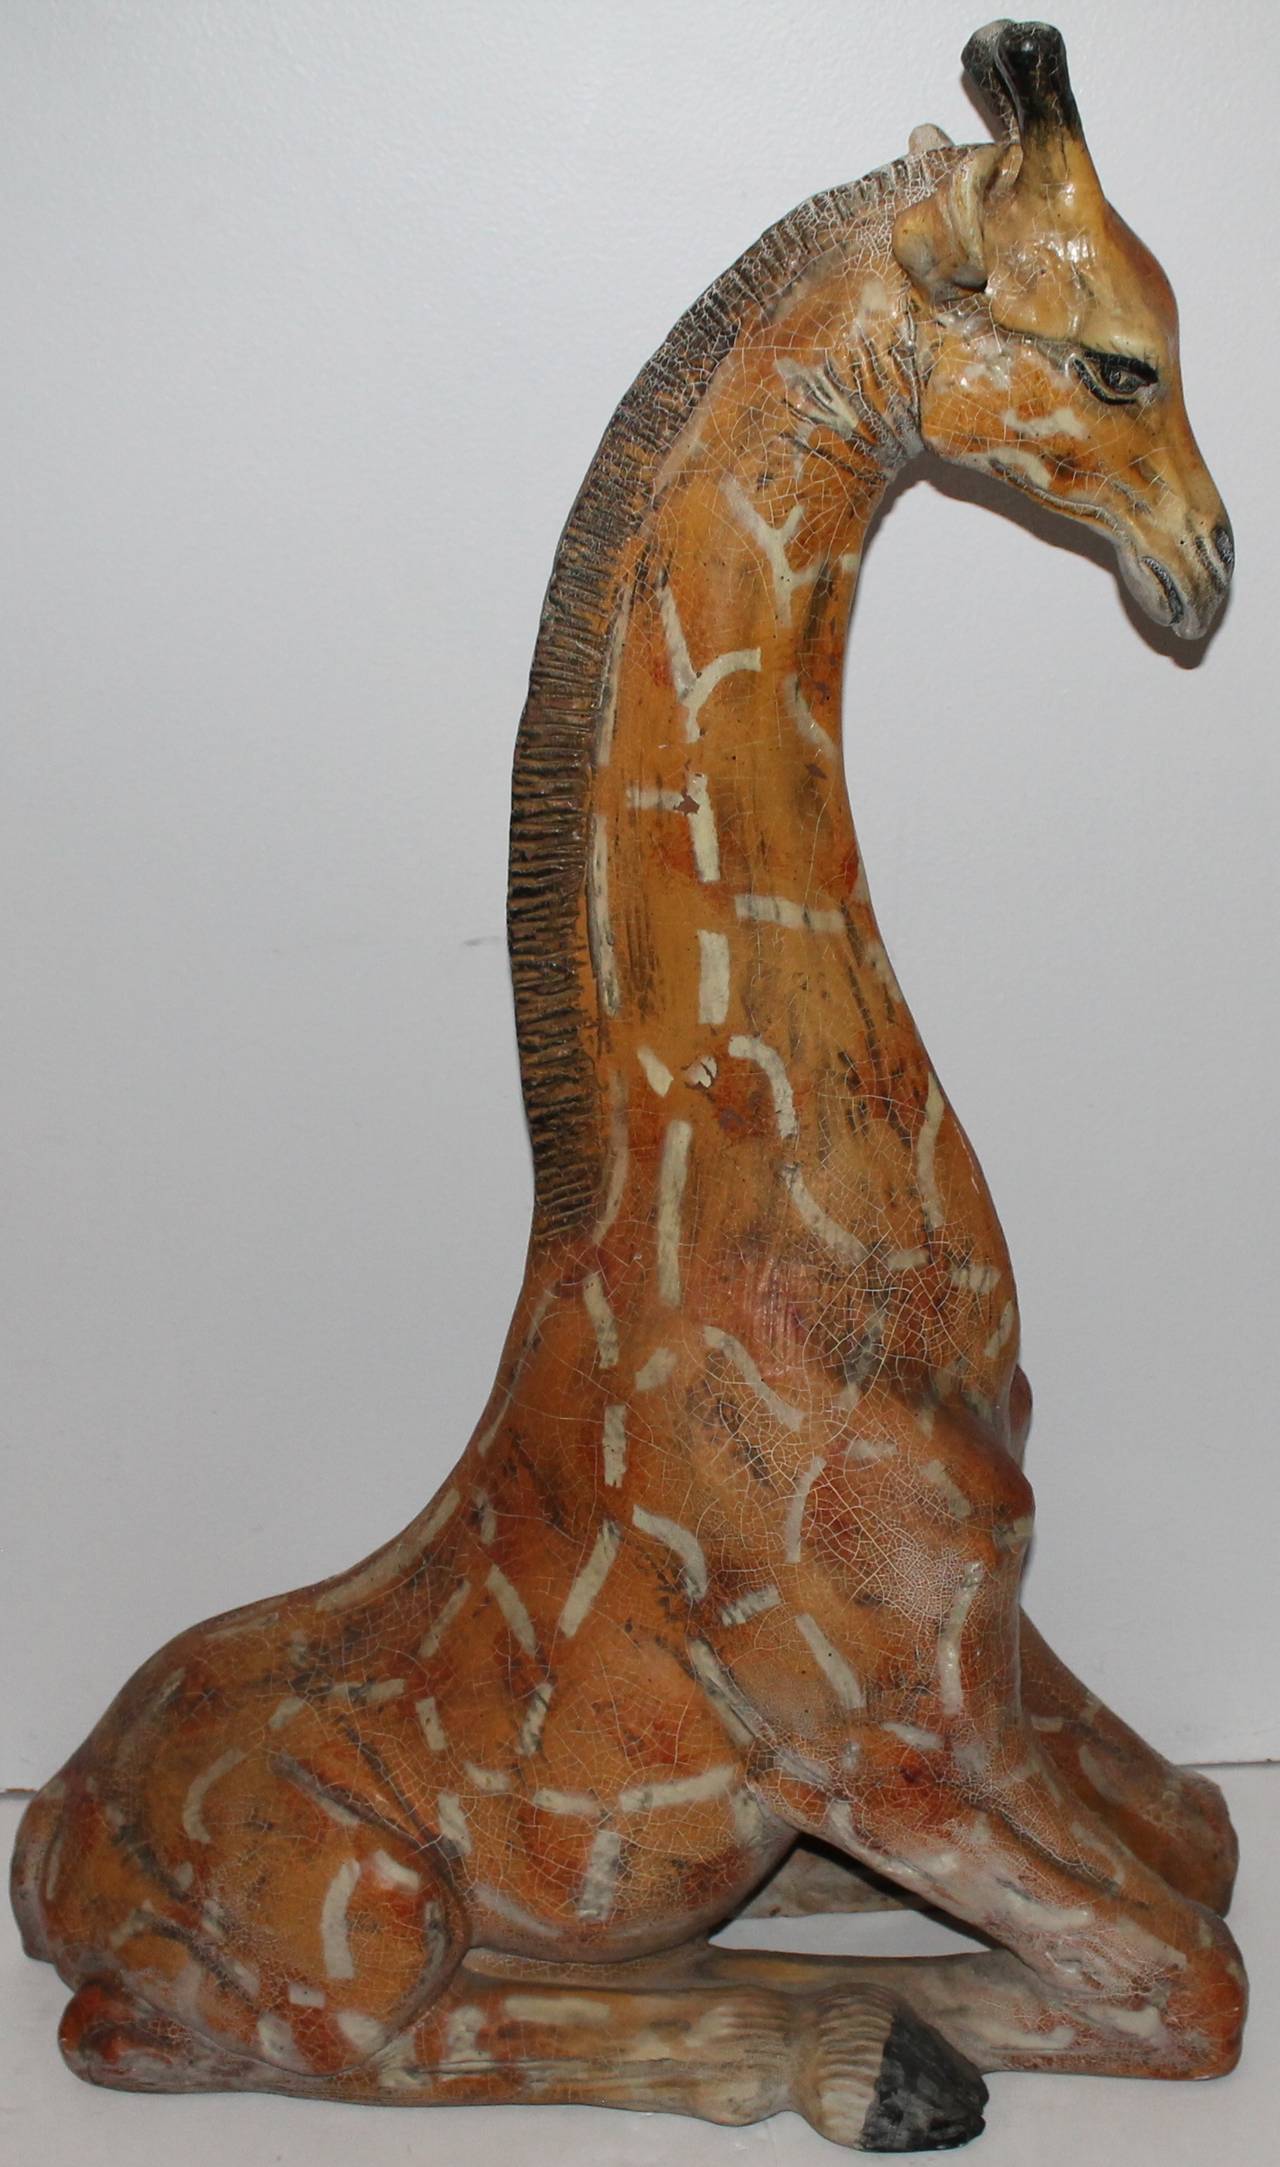 Patinated Monumental Original Painted Carnival Art Giraffe